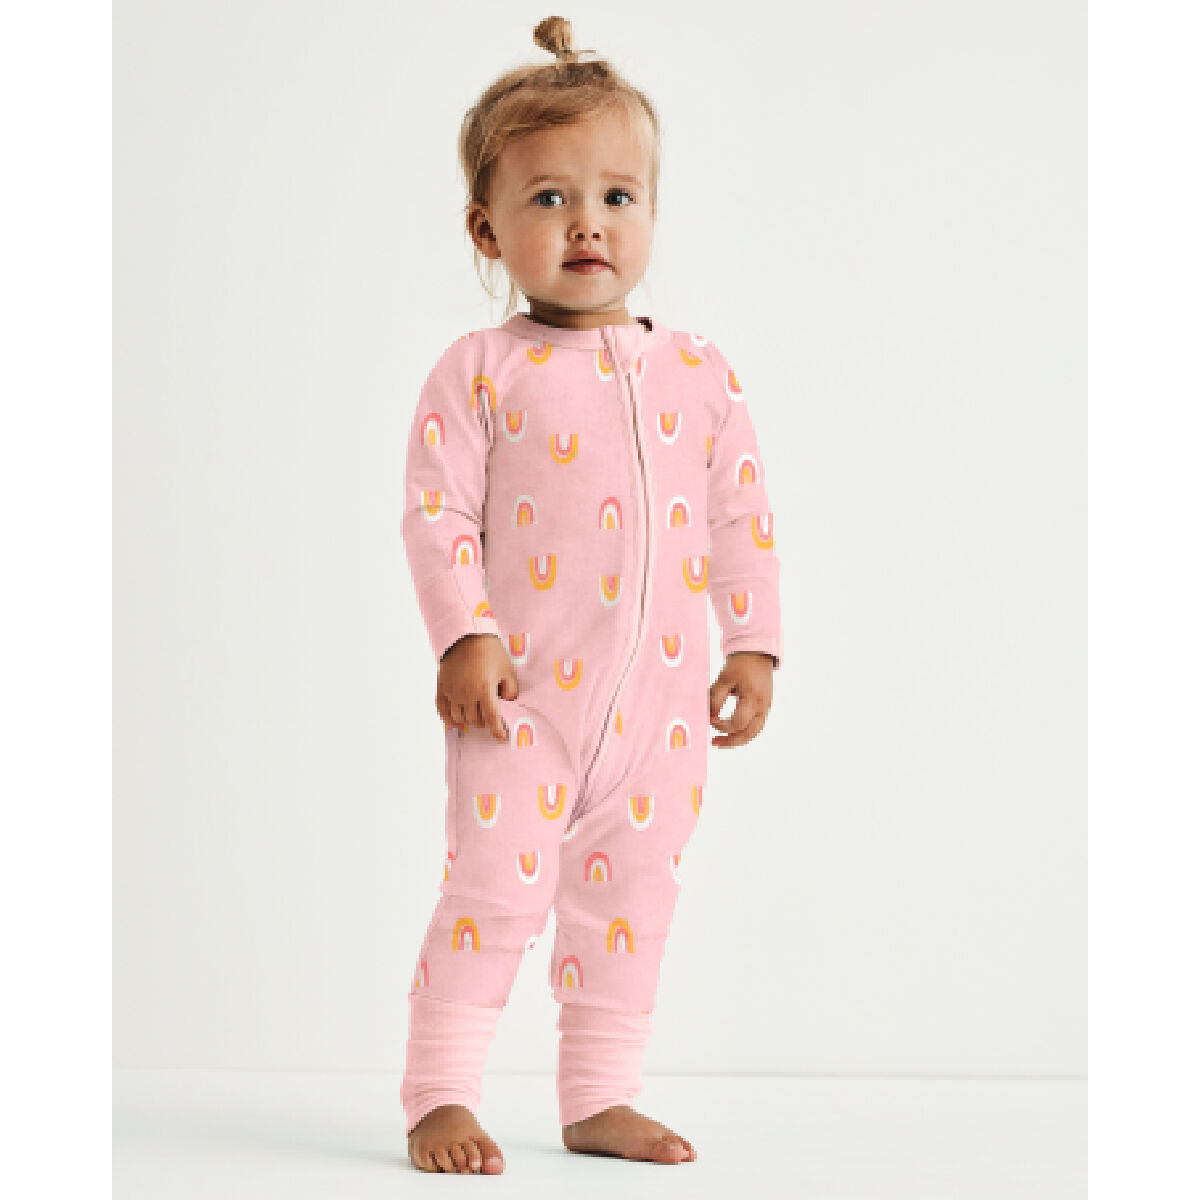 Visiter la boutique DimDim Baby Pyjama Côtelé Mixte Bébé 